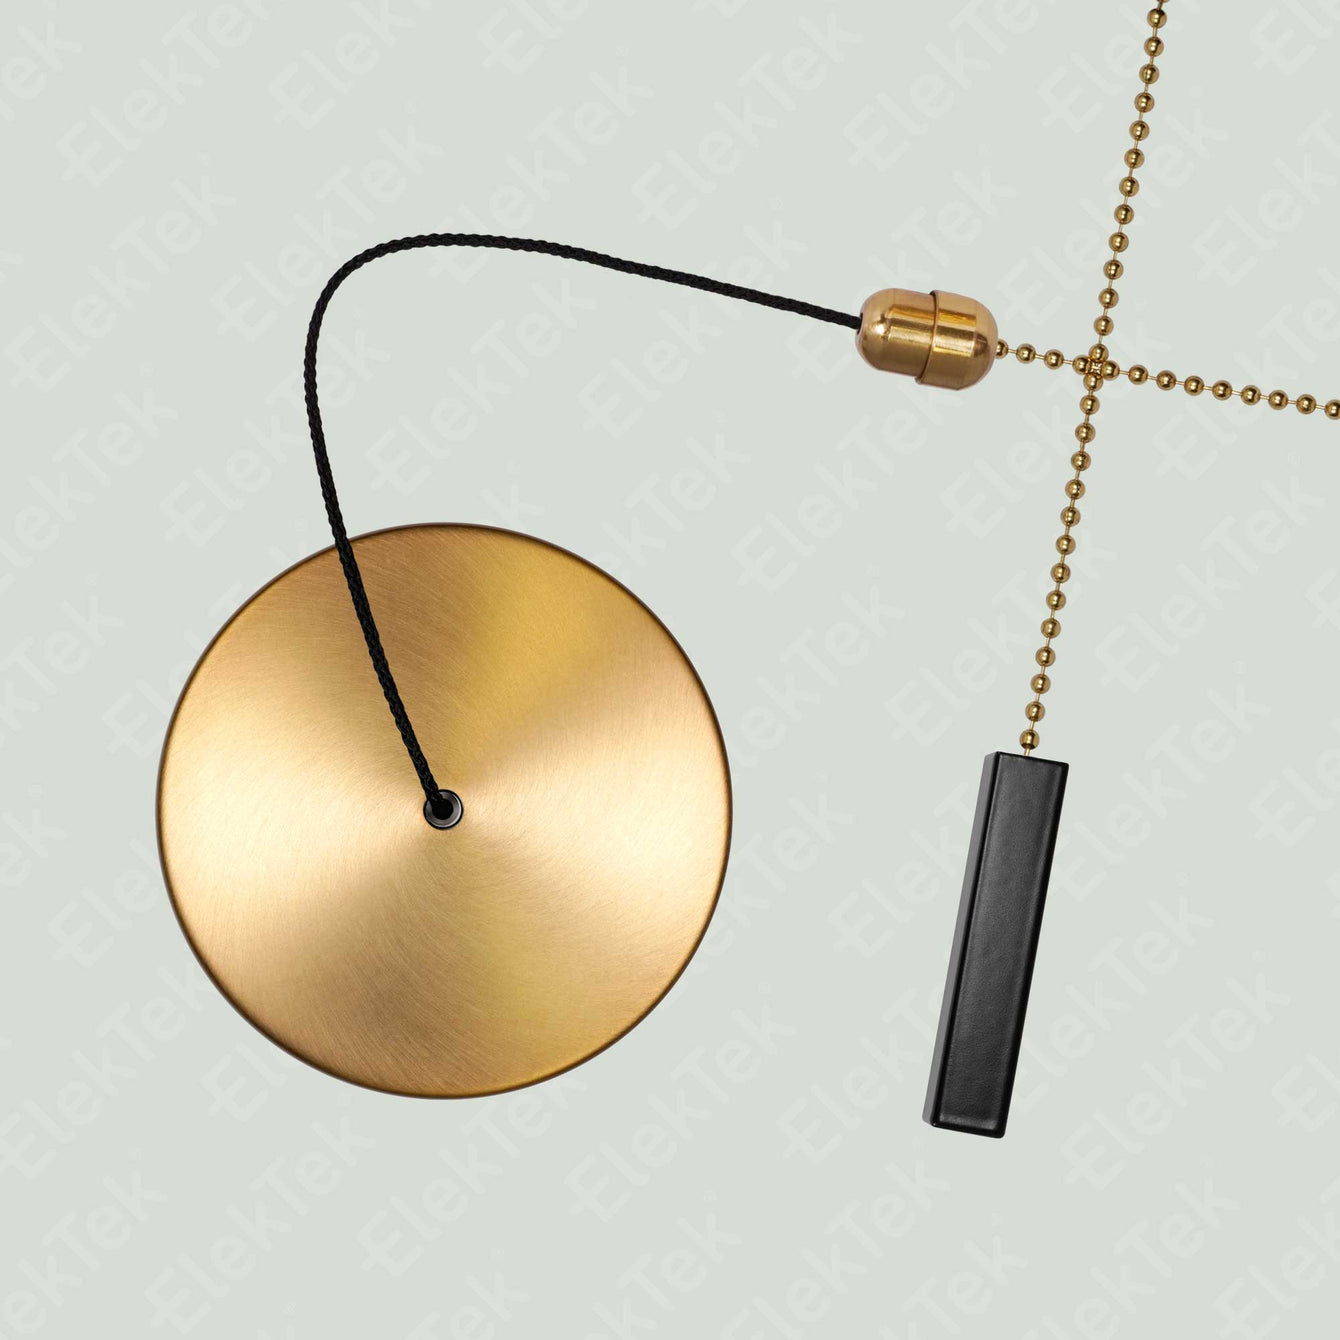 ElekTek Premium Brushed Brass Bathroom Light Pull Cord Switch Kit with Pull Chain Handle Black Square Bar / Cord